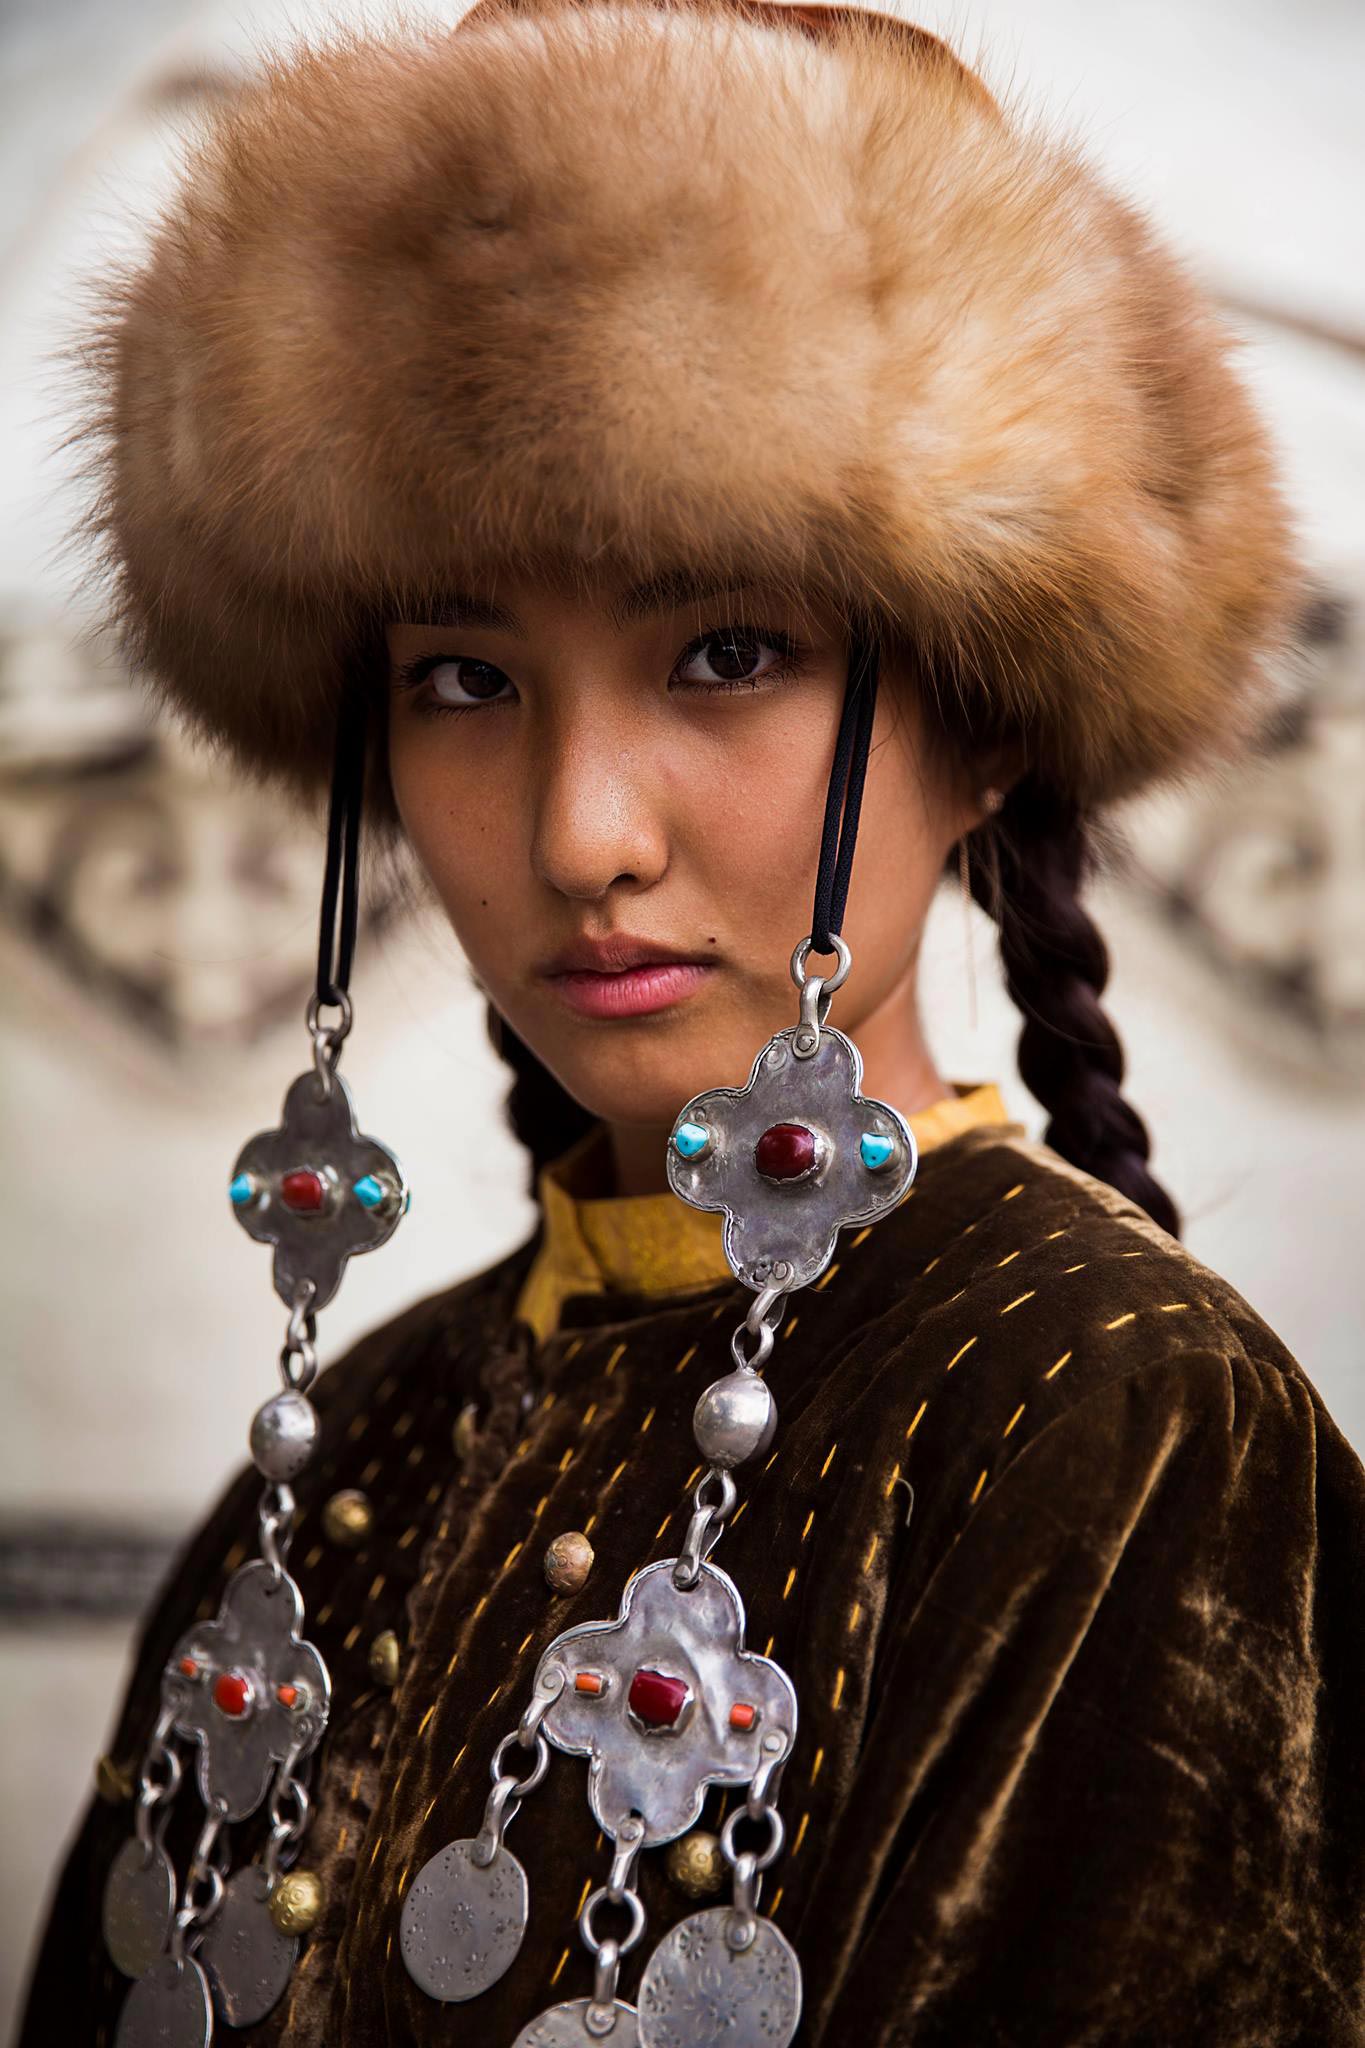 Самые красивые нации женщины. Даниэлла Ван монголка. Микаэла норок киргизка. Михаэла норок атлас красоты.